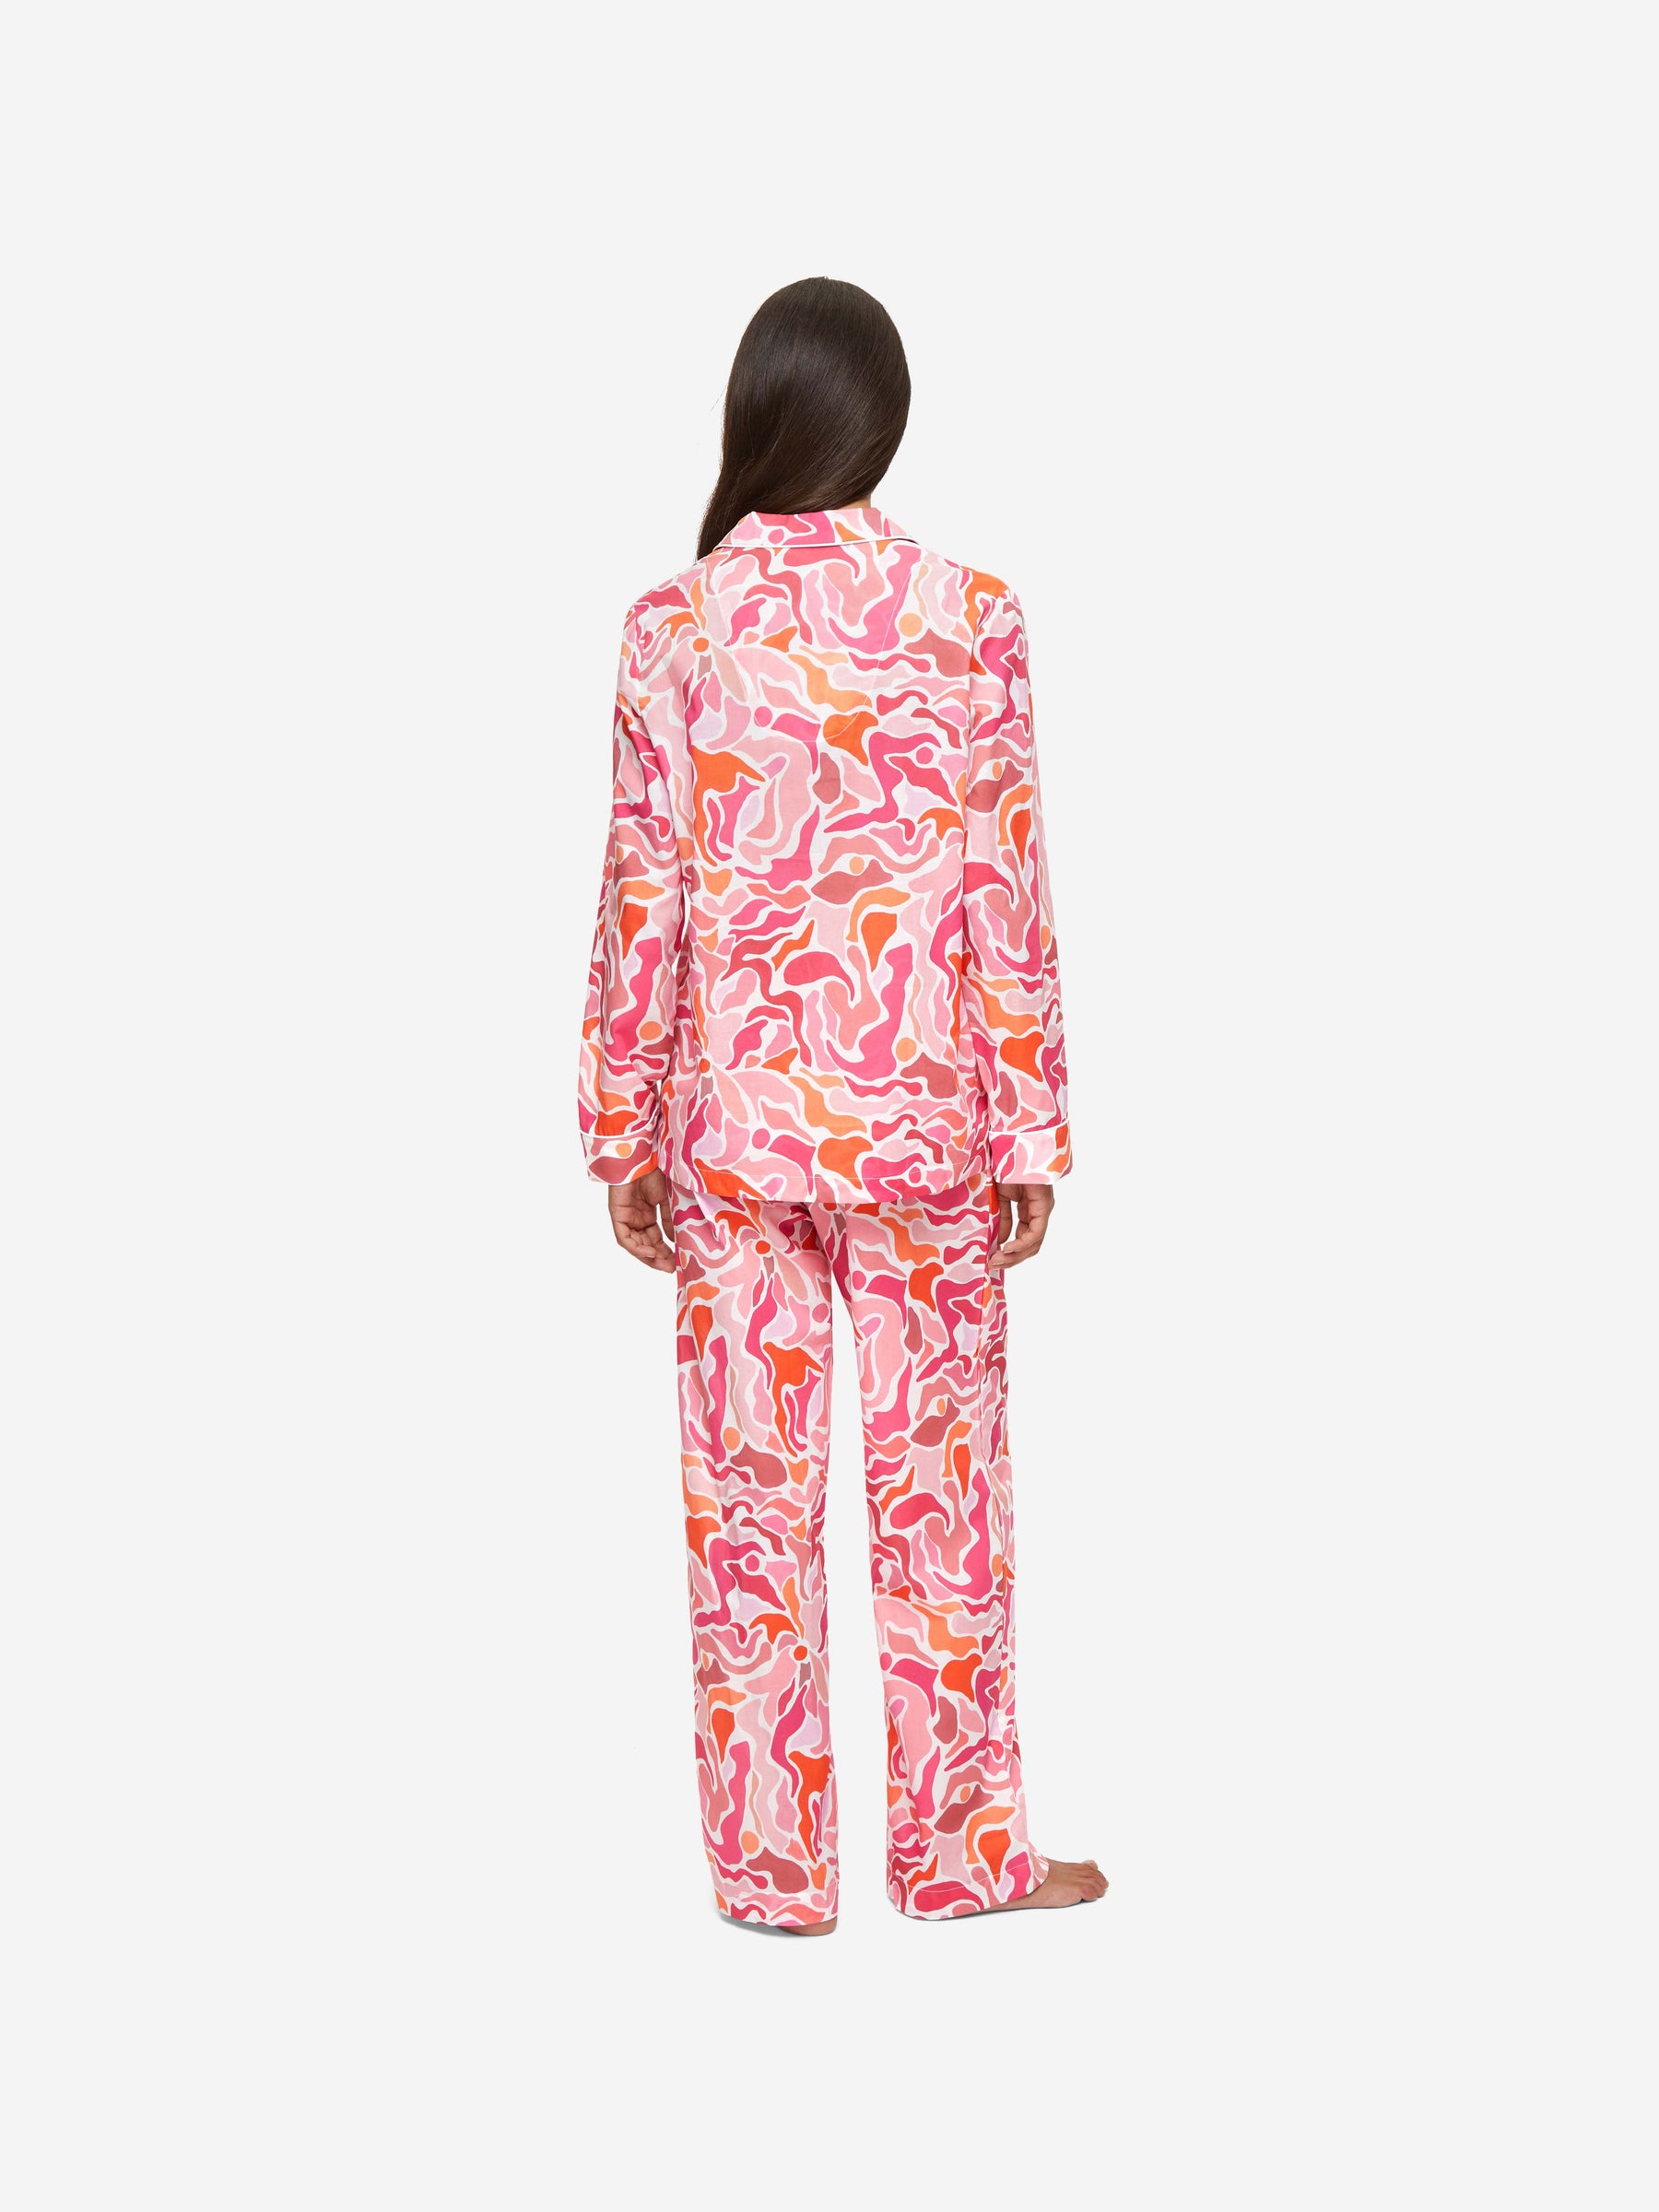 Women's Pyjamas Ledbury 61 Cotton Batiste Pink